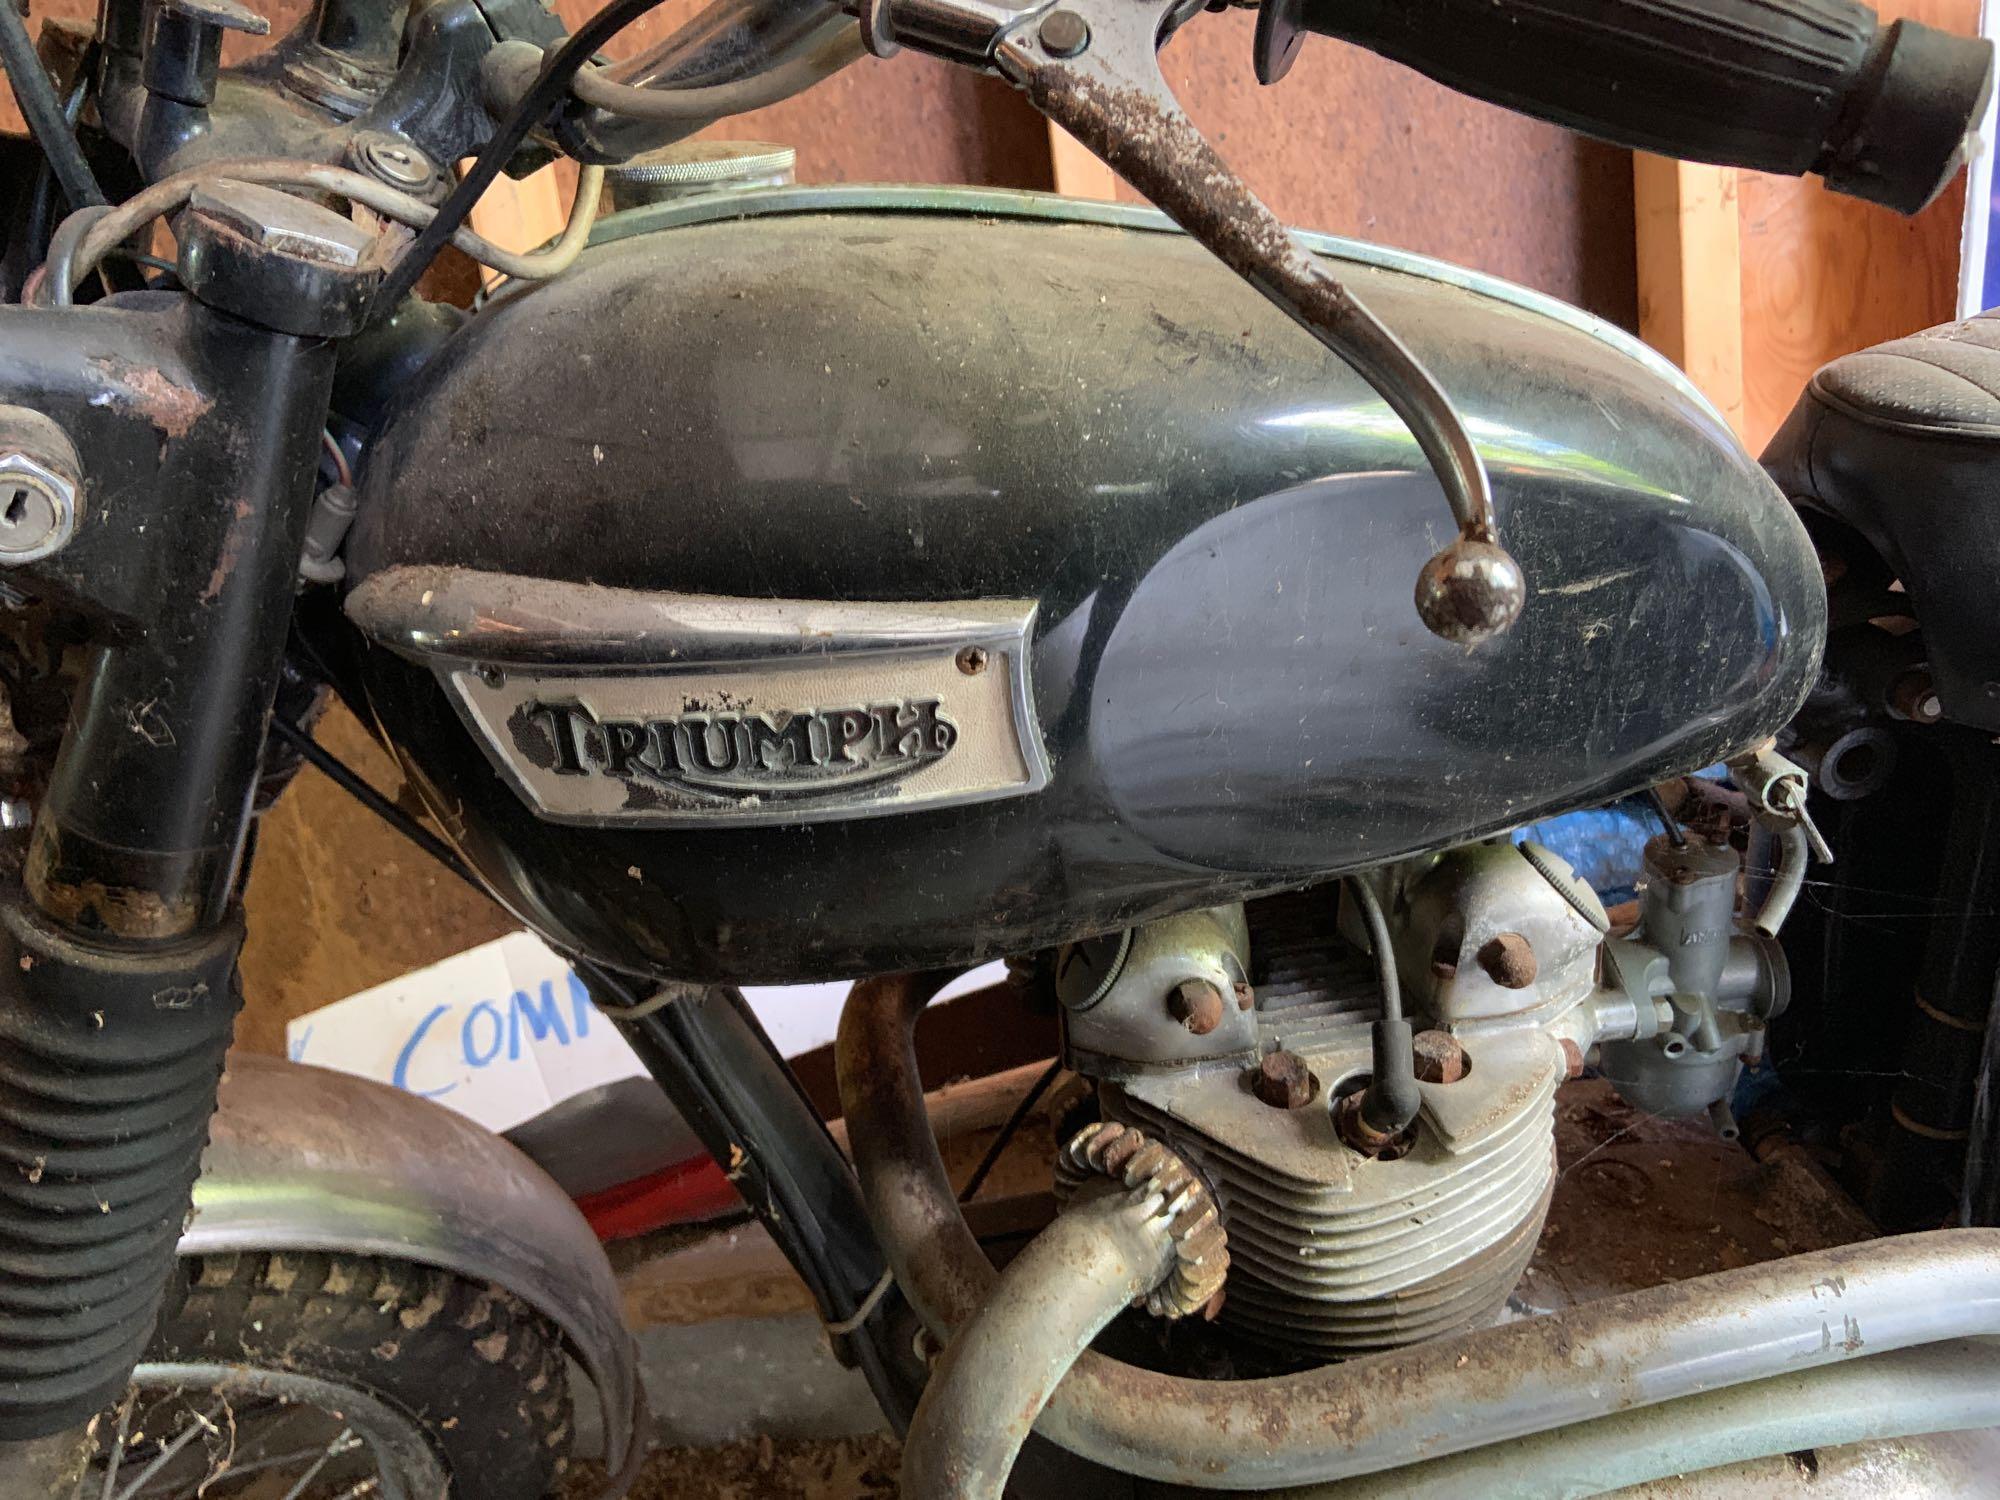 Vintage triumph motorcycle for parts